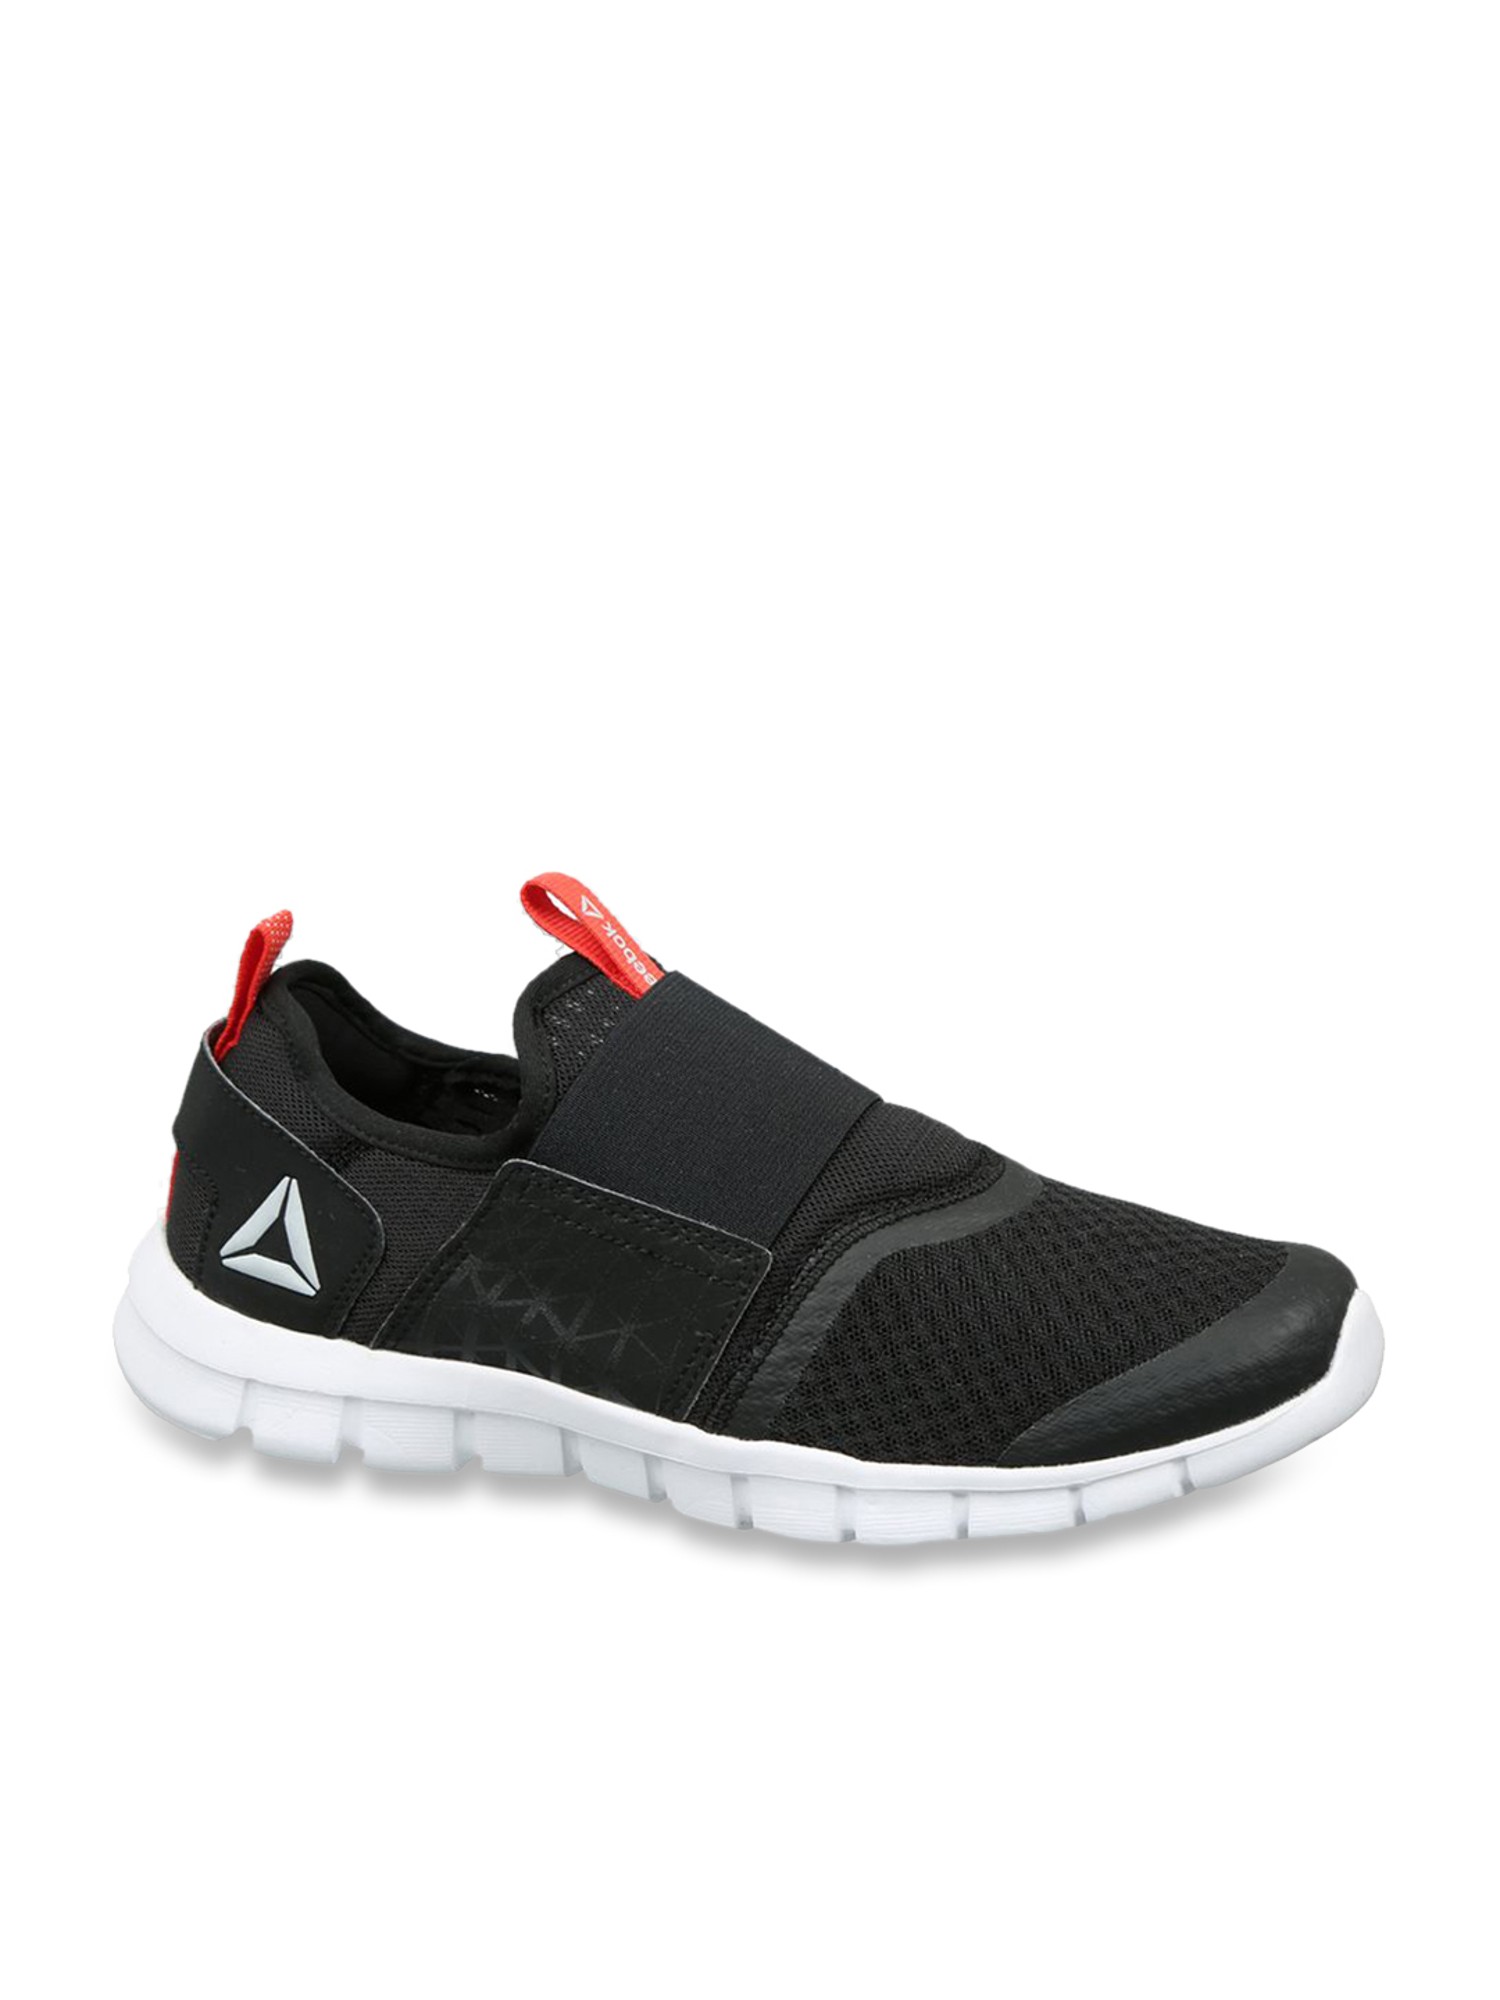 Buy Men Grey Sports Sneakers Online | SKU: 238-6060-14-10-Metro Shoes